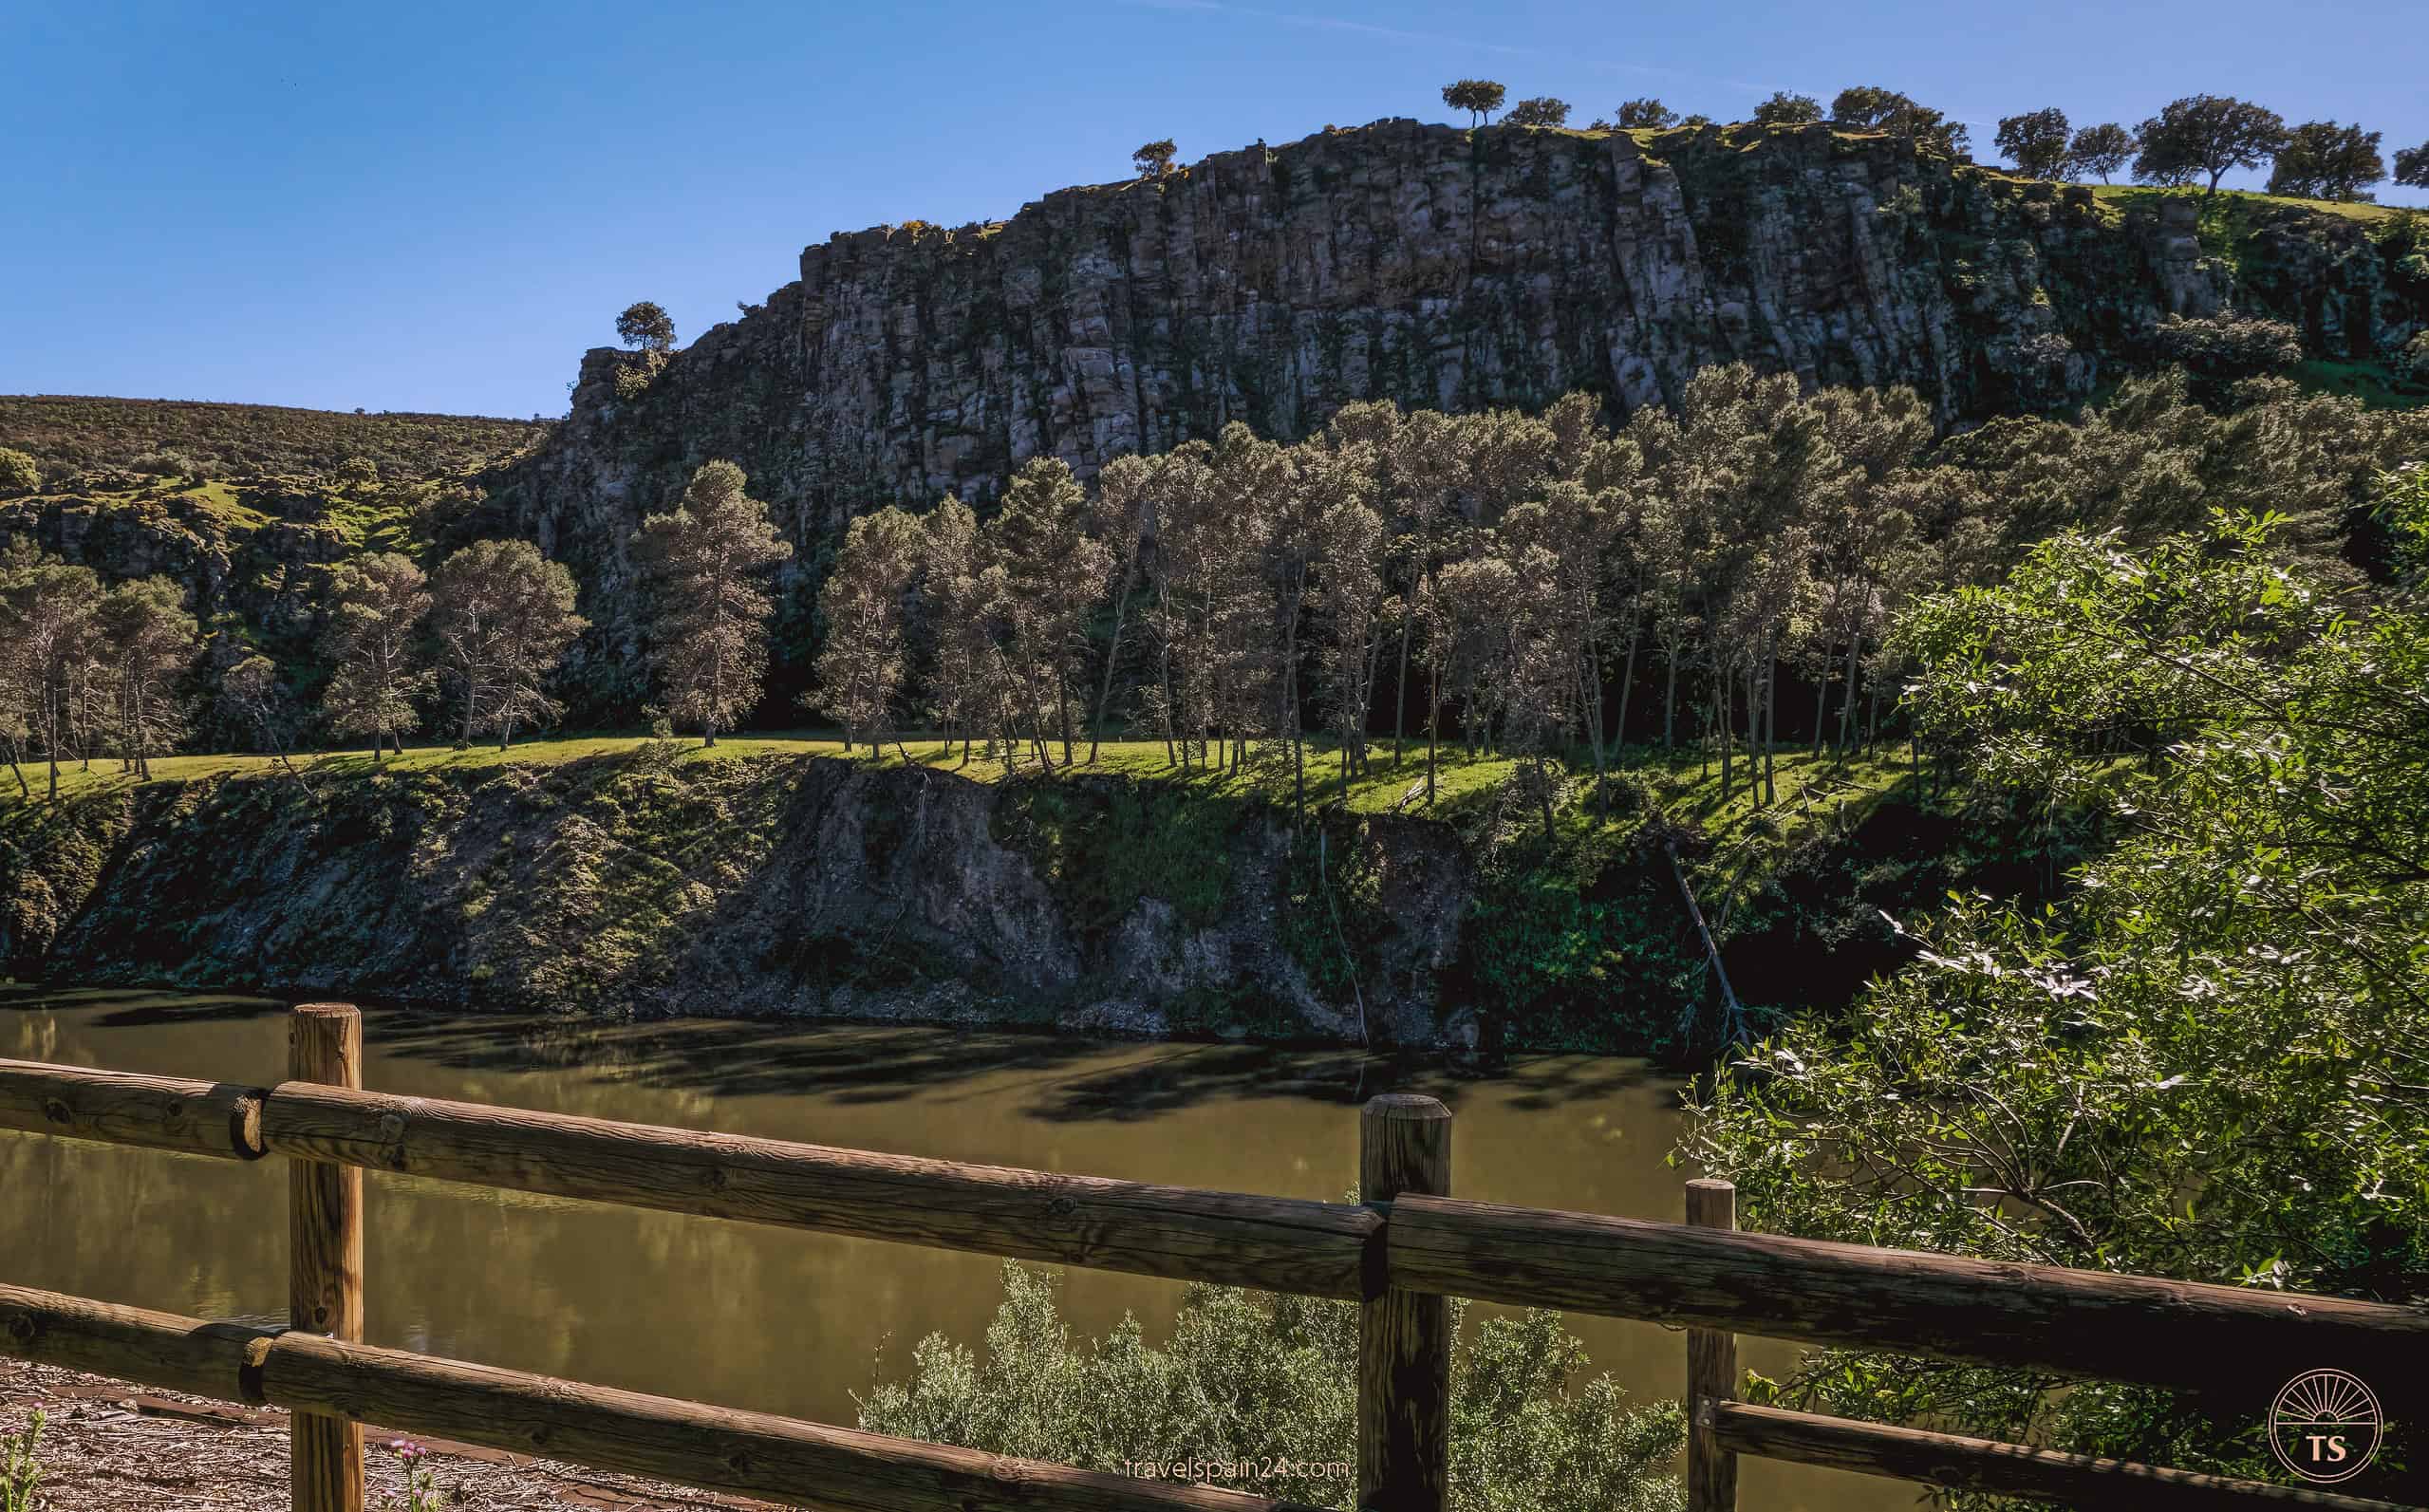 Scenic view from Mirador de la Tajadilla in Monfragüe National Park, showcasing an impressive rock formation and expansive landscape views.